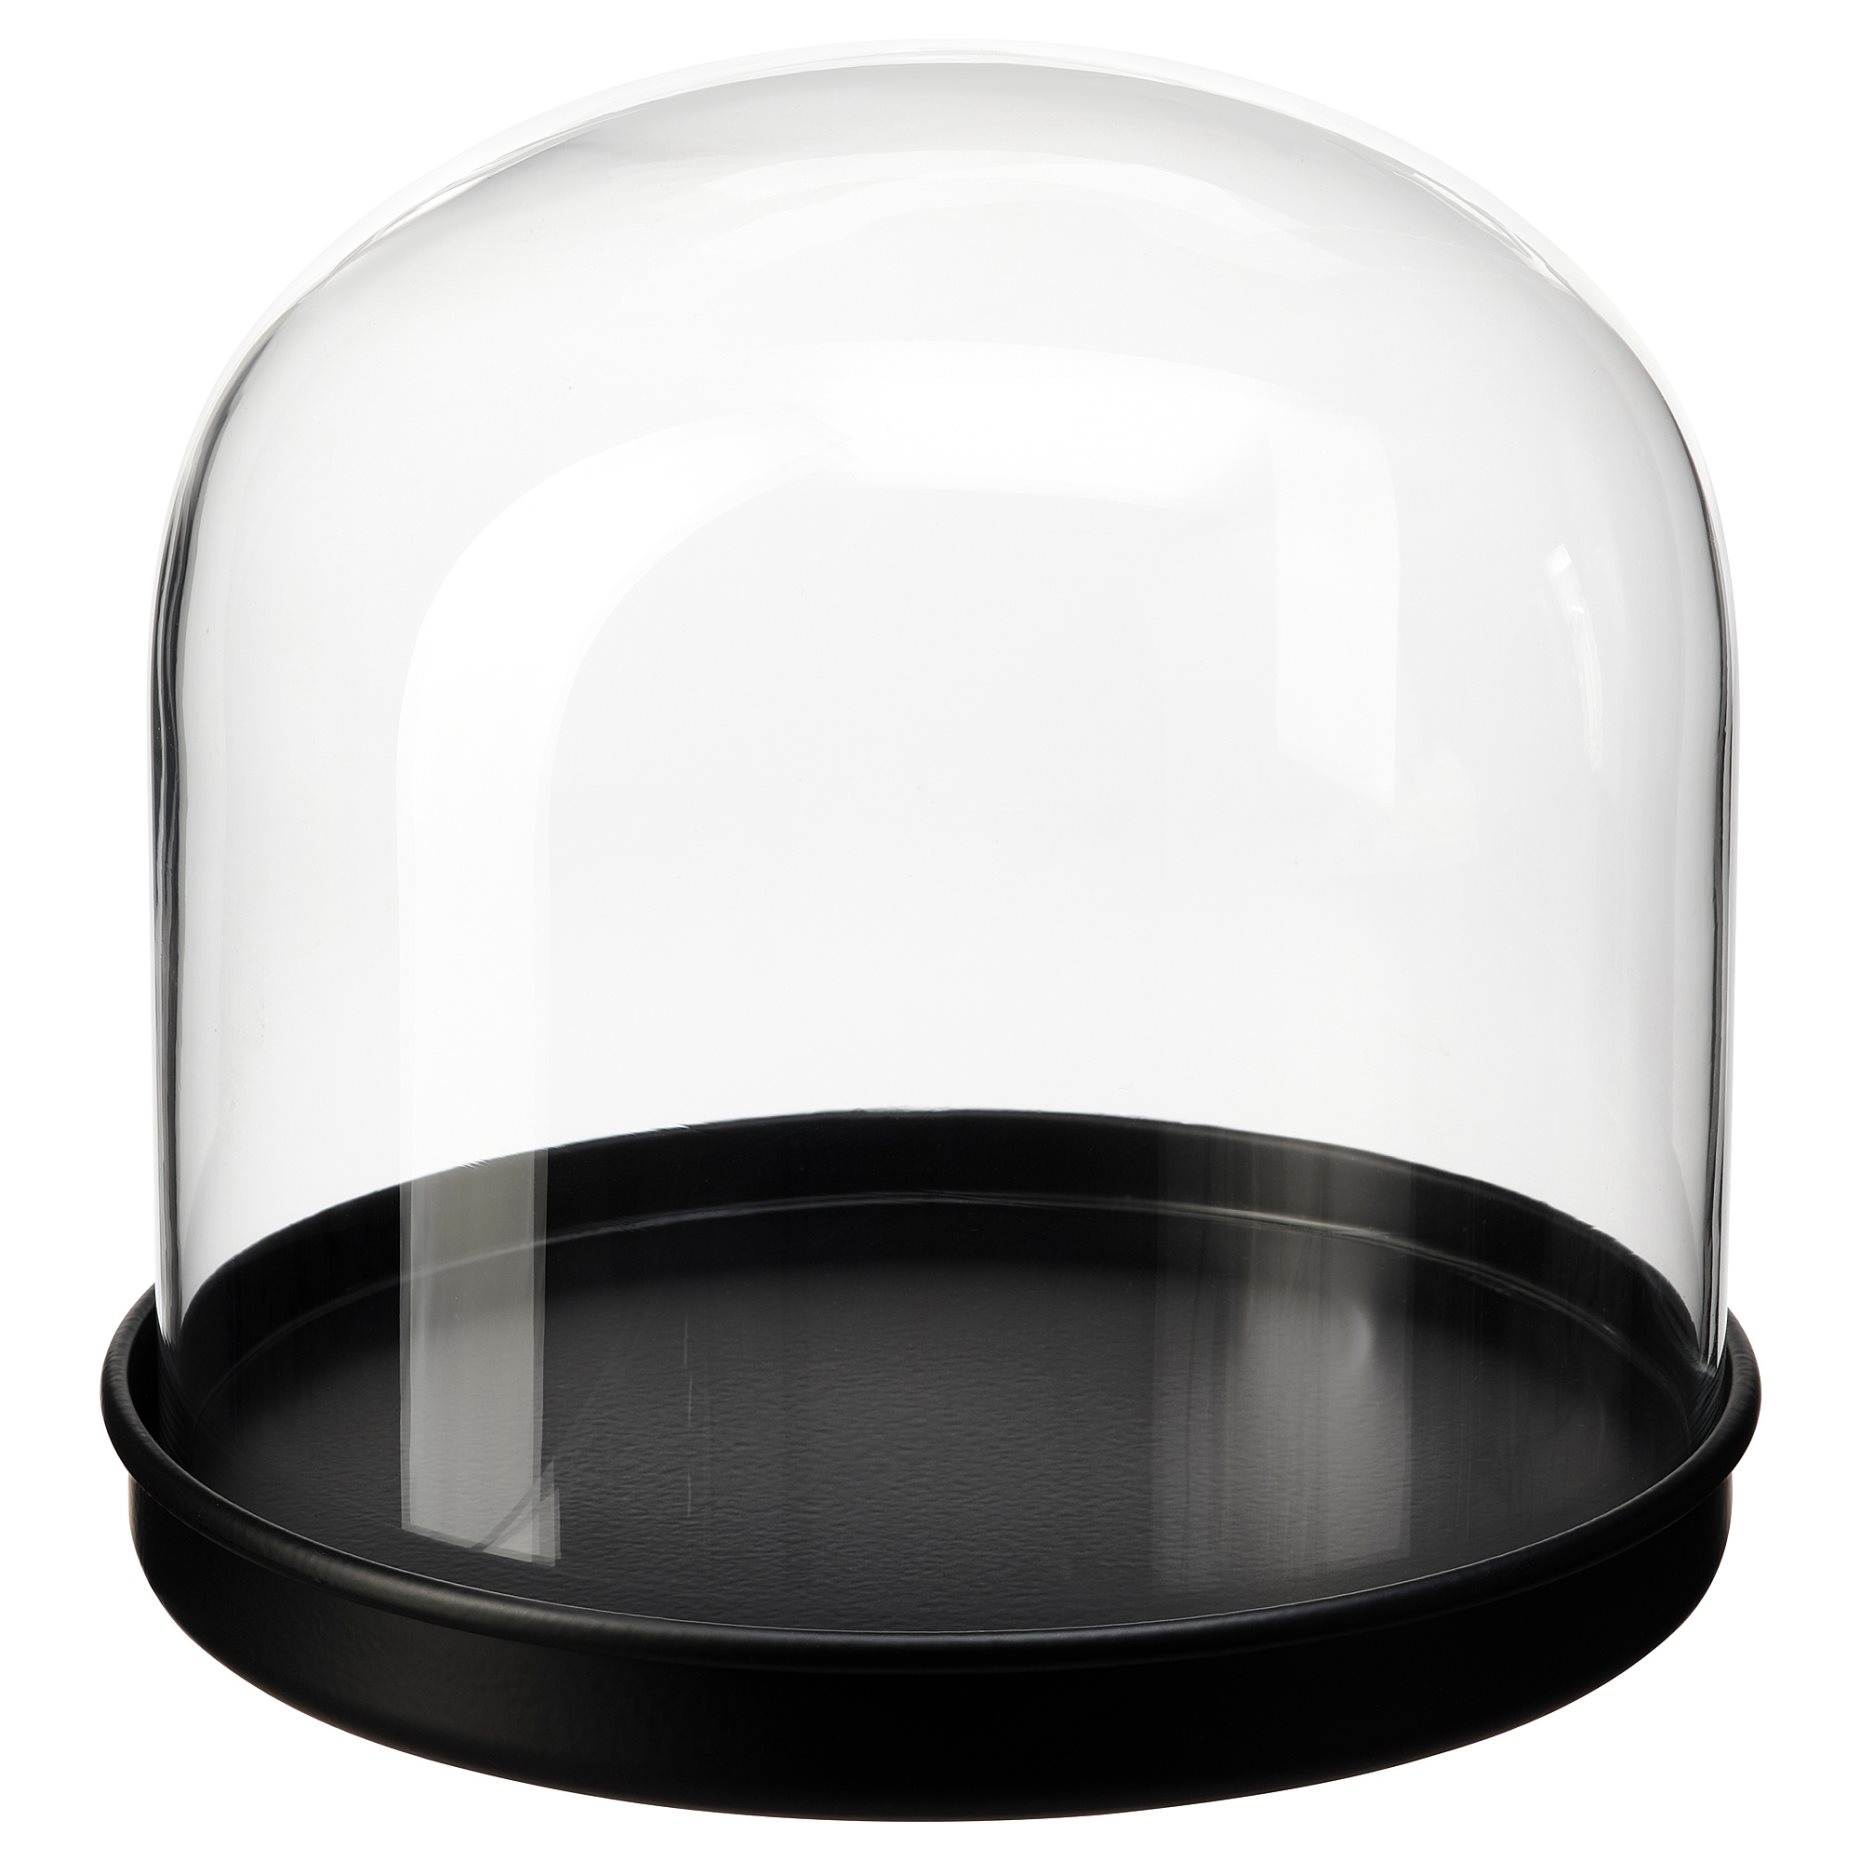 SKÖNJA, glass dome with base, 16 cm, 004.976.89